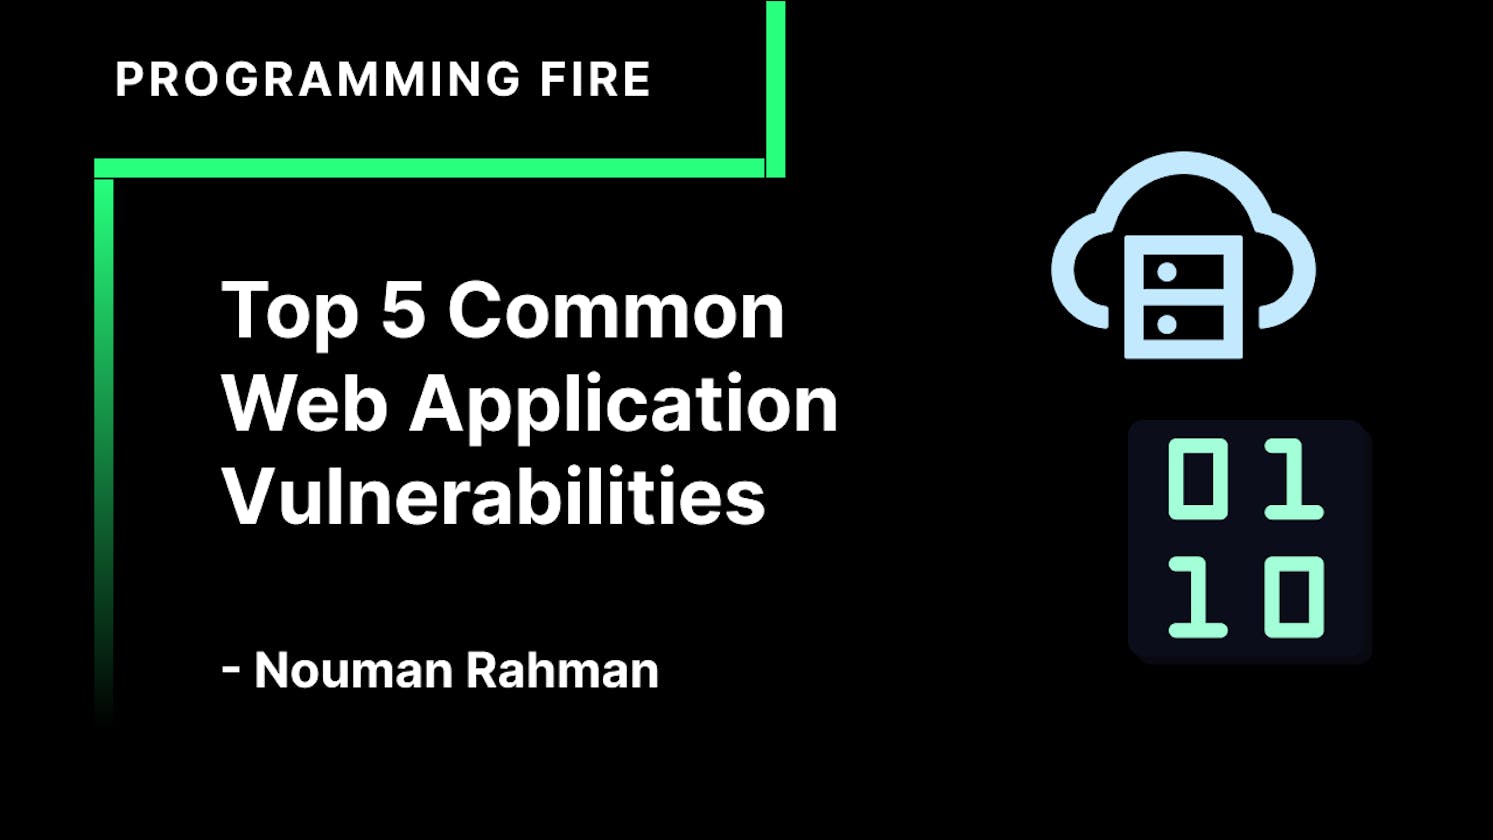 Top 5 Common Web Application Vulnerabilities